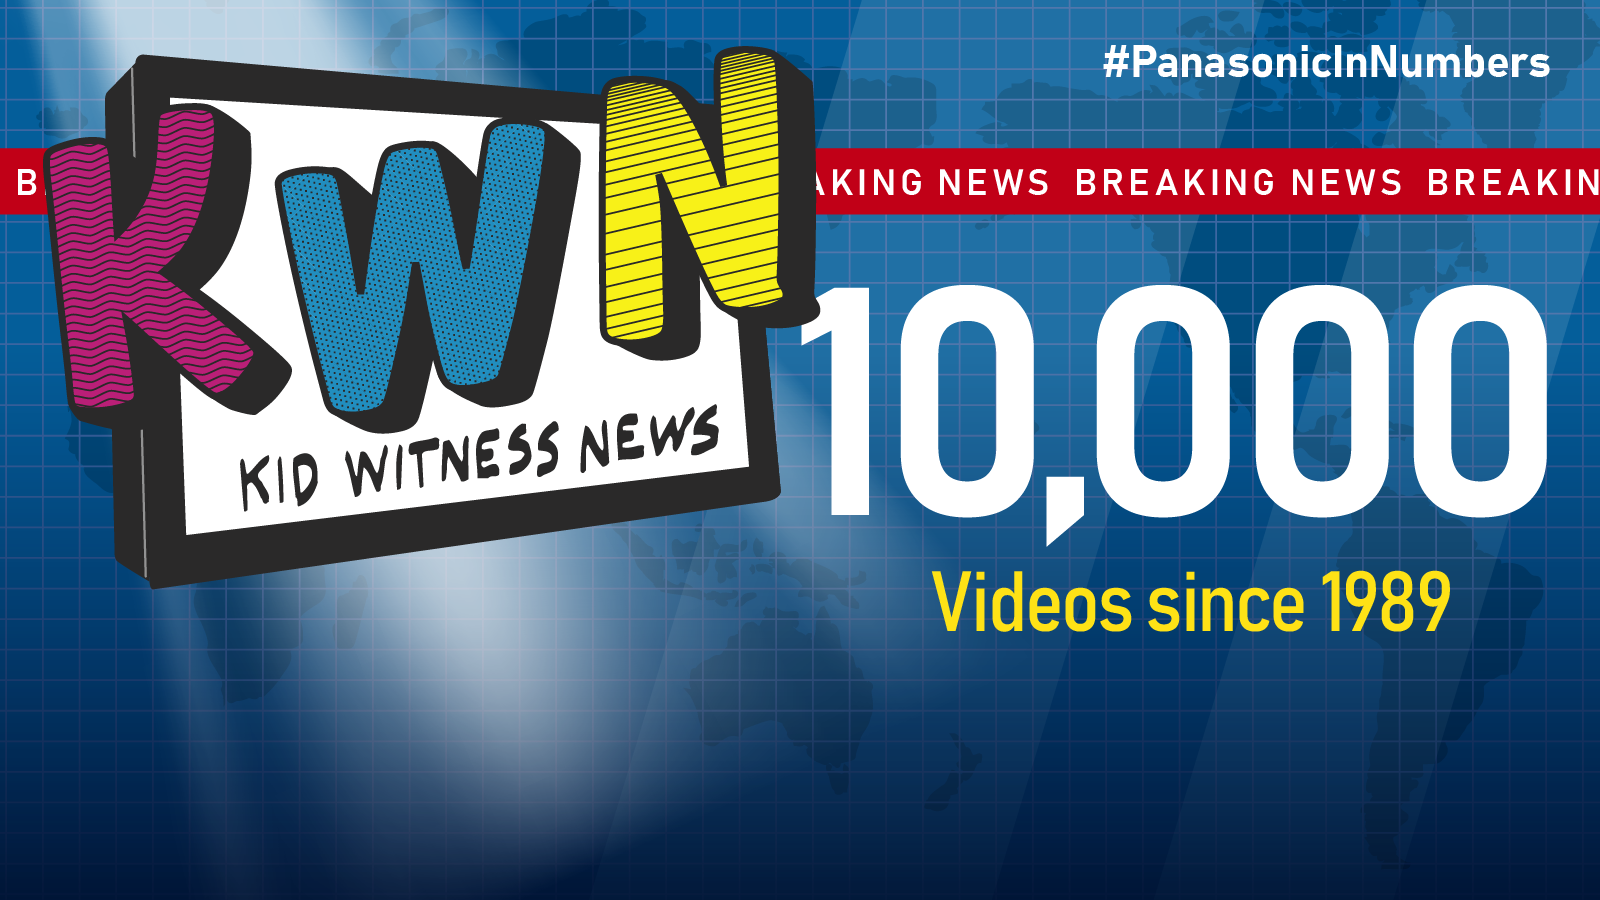 Panasonic in Numbers: Kid Witness News